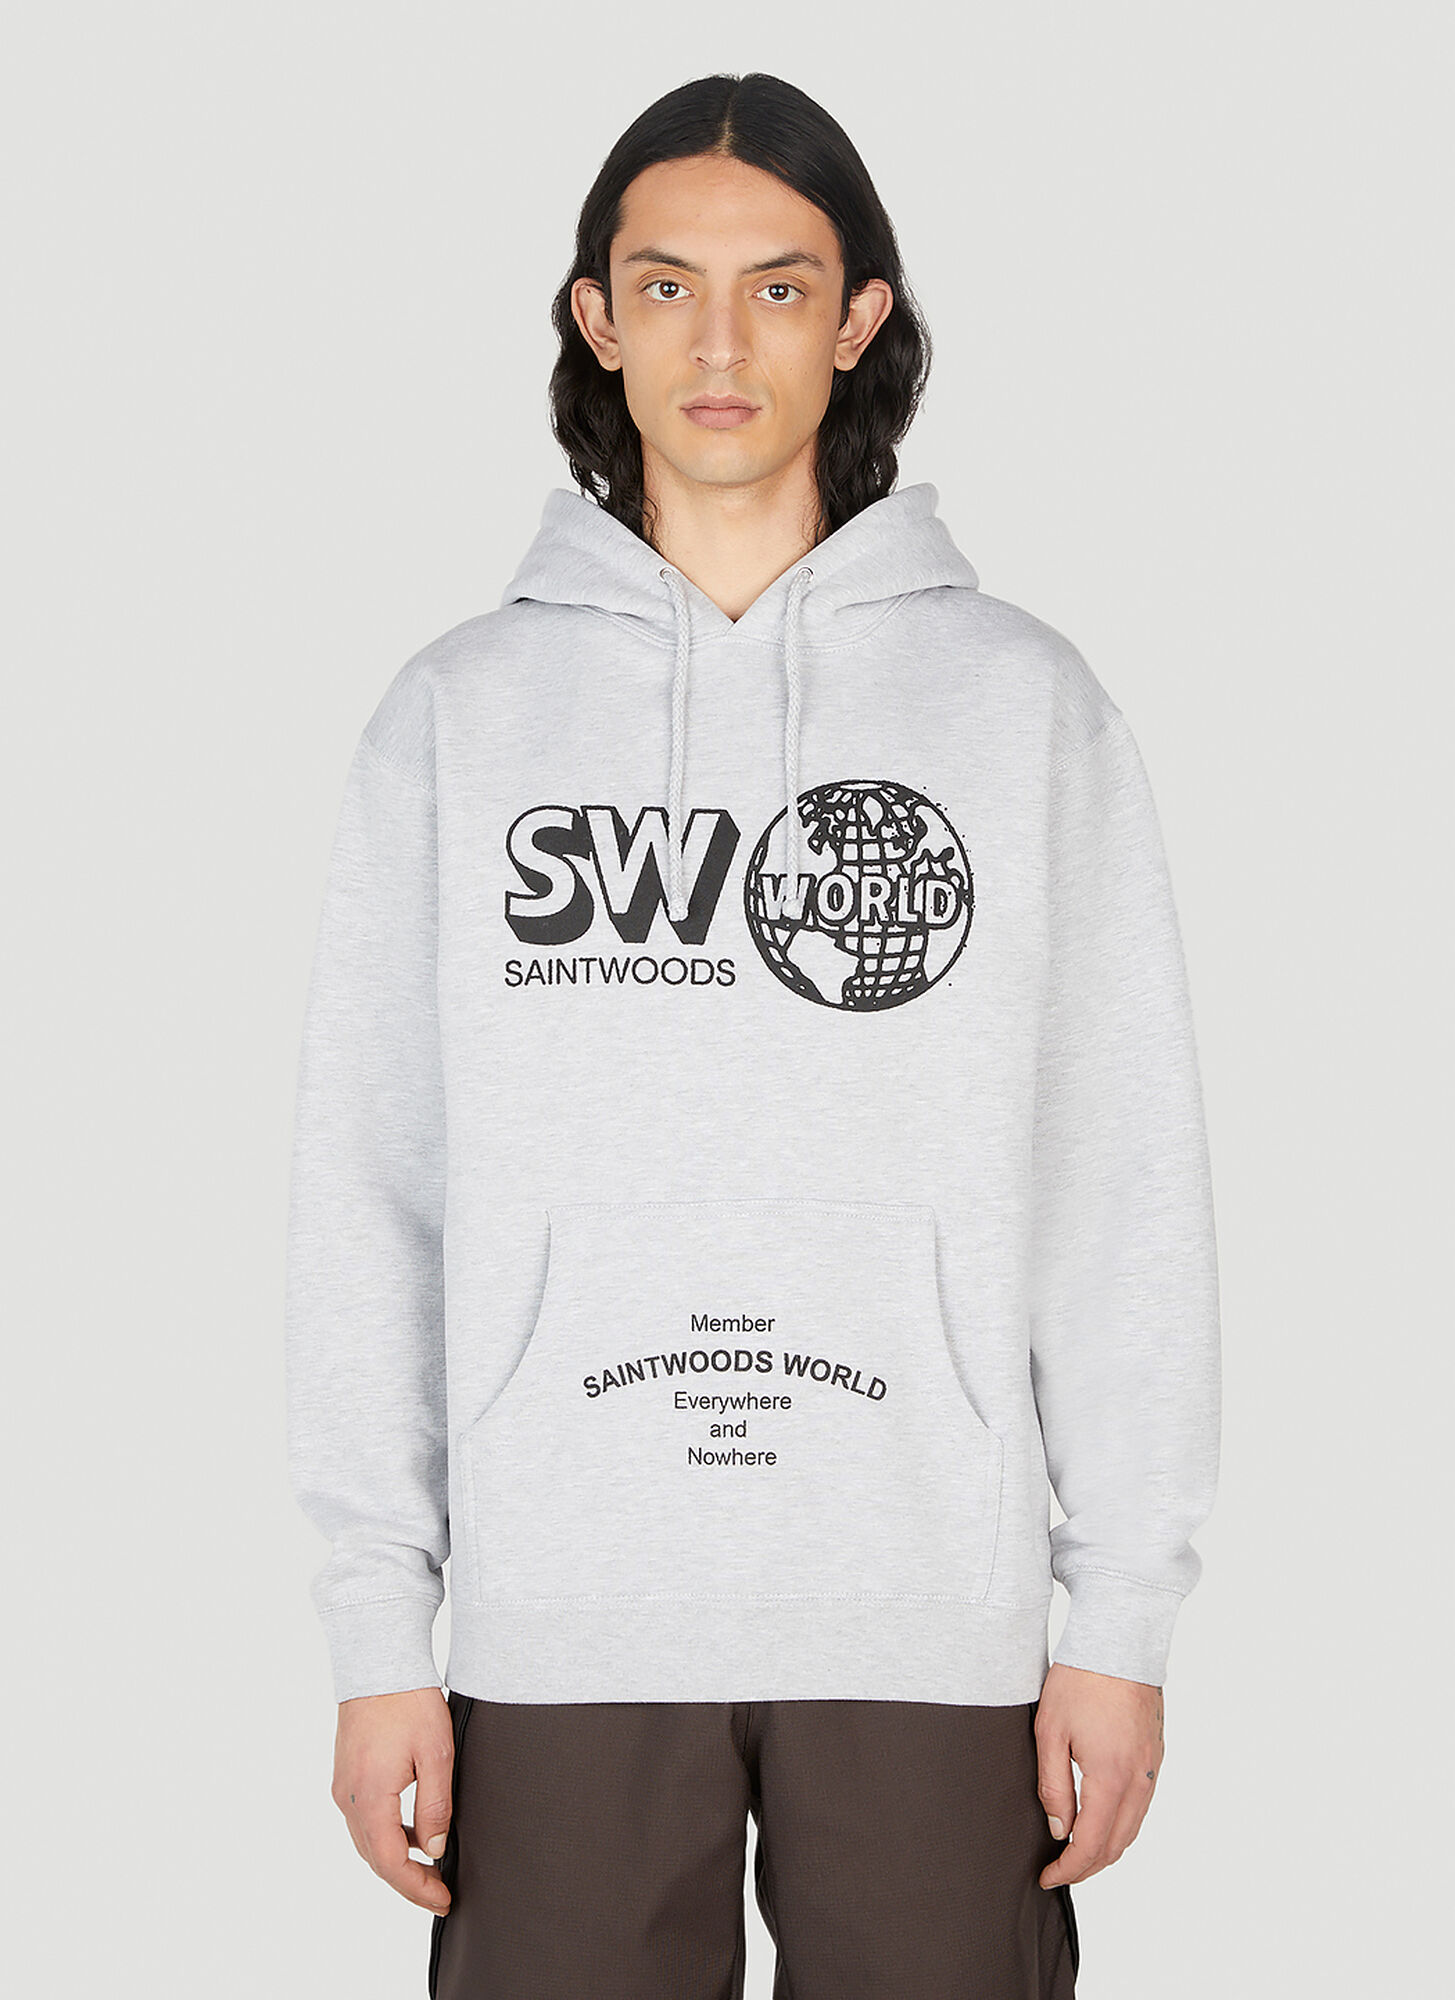 Saintwoods World Member Hooded Sweatshirt In Light Grey